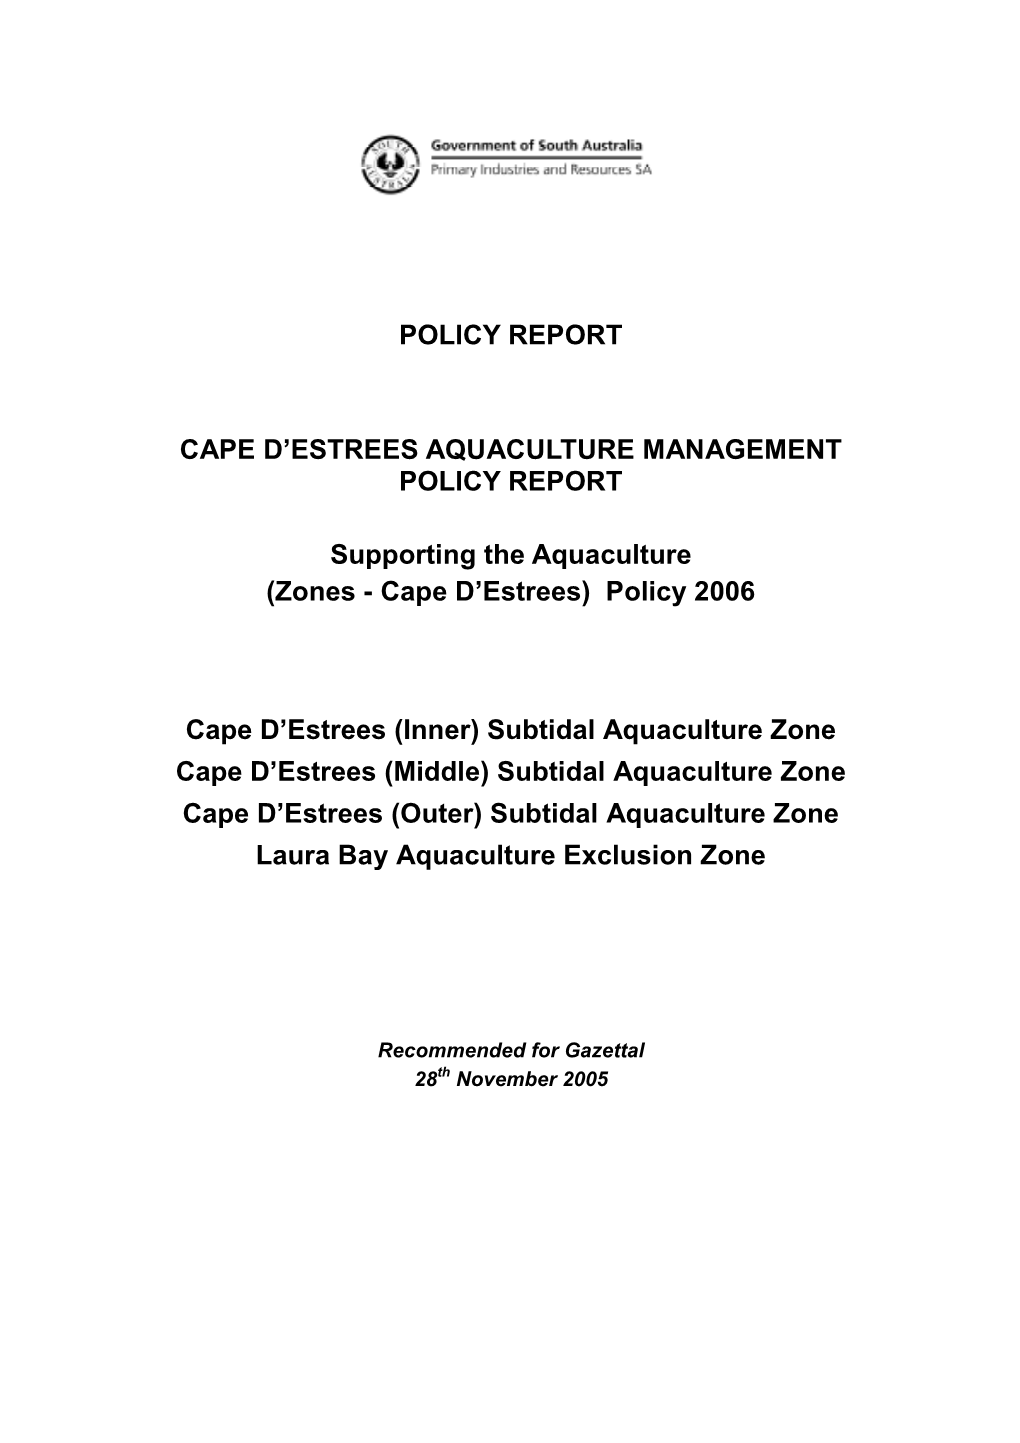 (Zones - Cape D’Estrees) Policy 2006